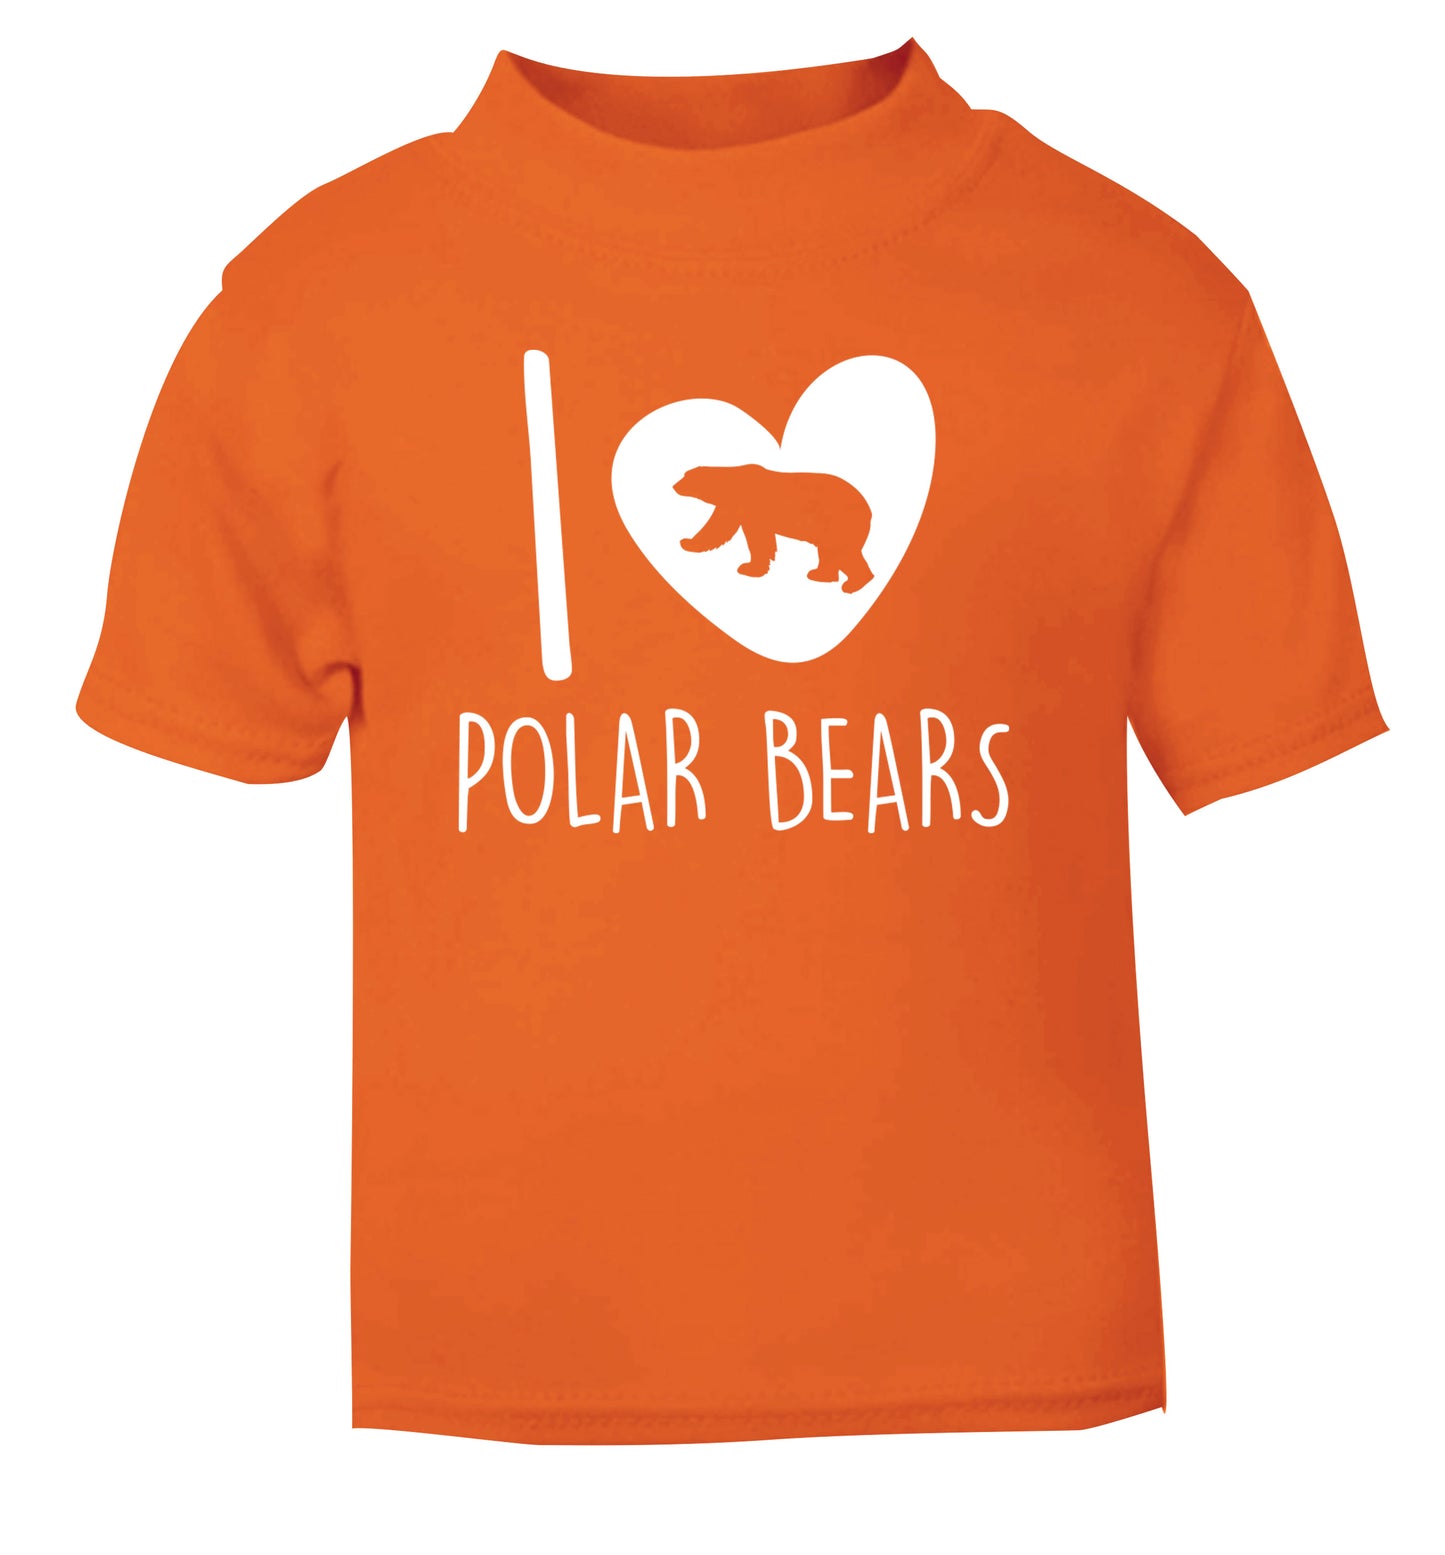 I Love Polar Bears orange Baby Toddler Tshirt 2 Years